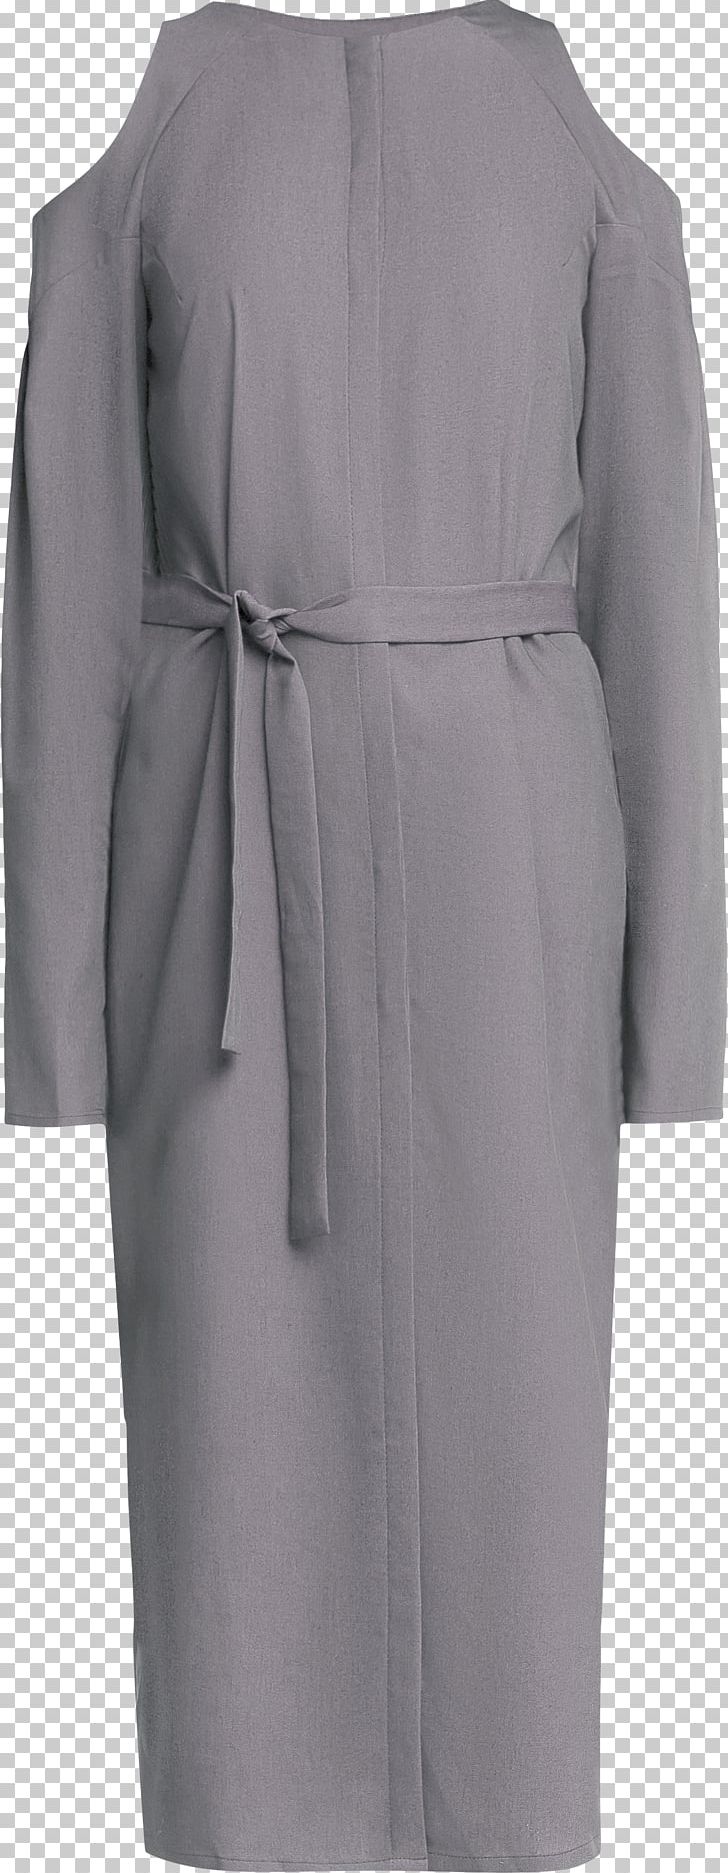 Europe Robe Coat Dress Sleeve PNG, Clipart, Clothing, Coat, Day Dress, Designer, Dress Free PNG Download